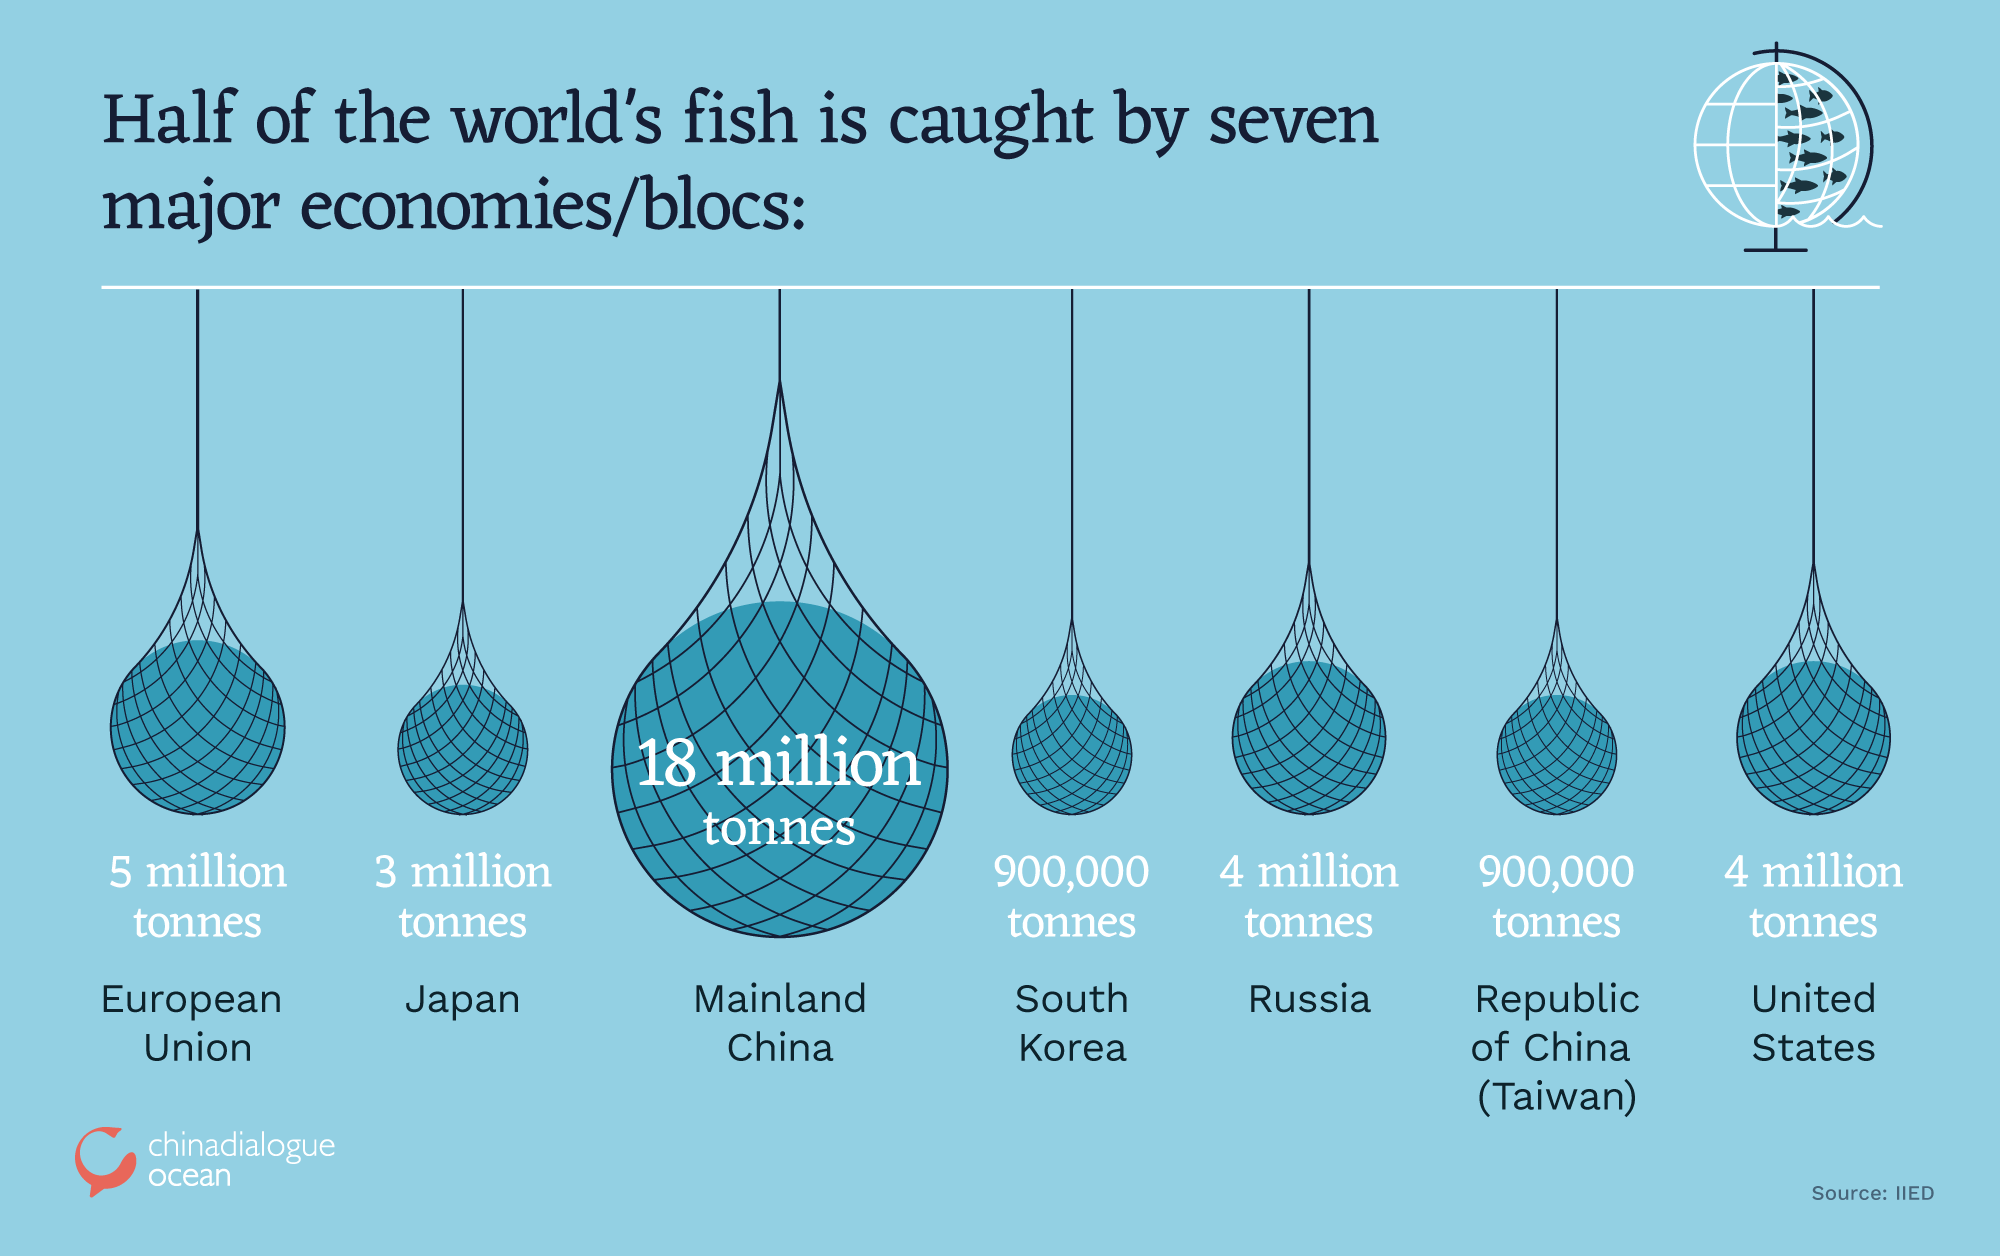 Half of world's fish caught by seven major economies/blocs